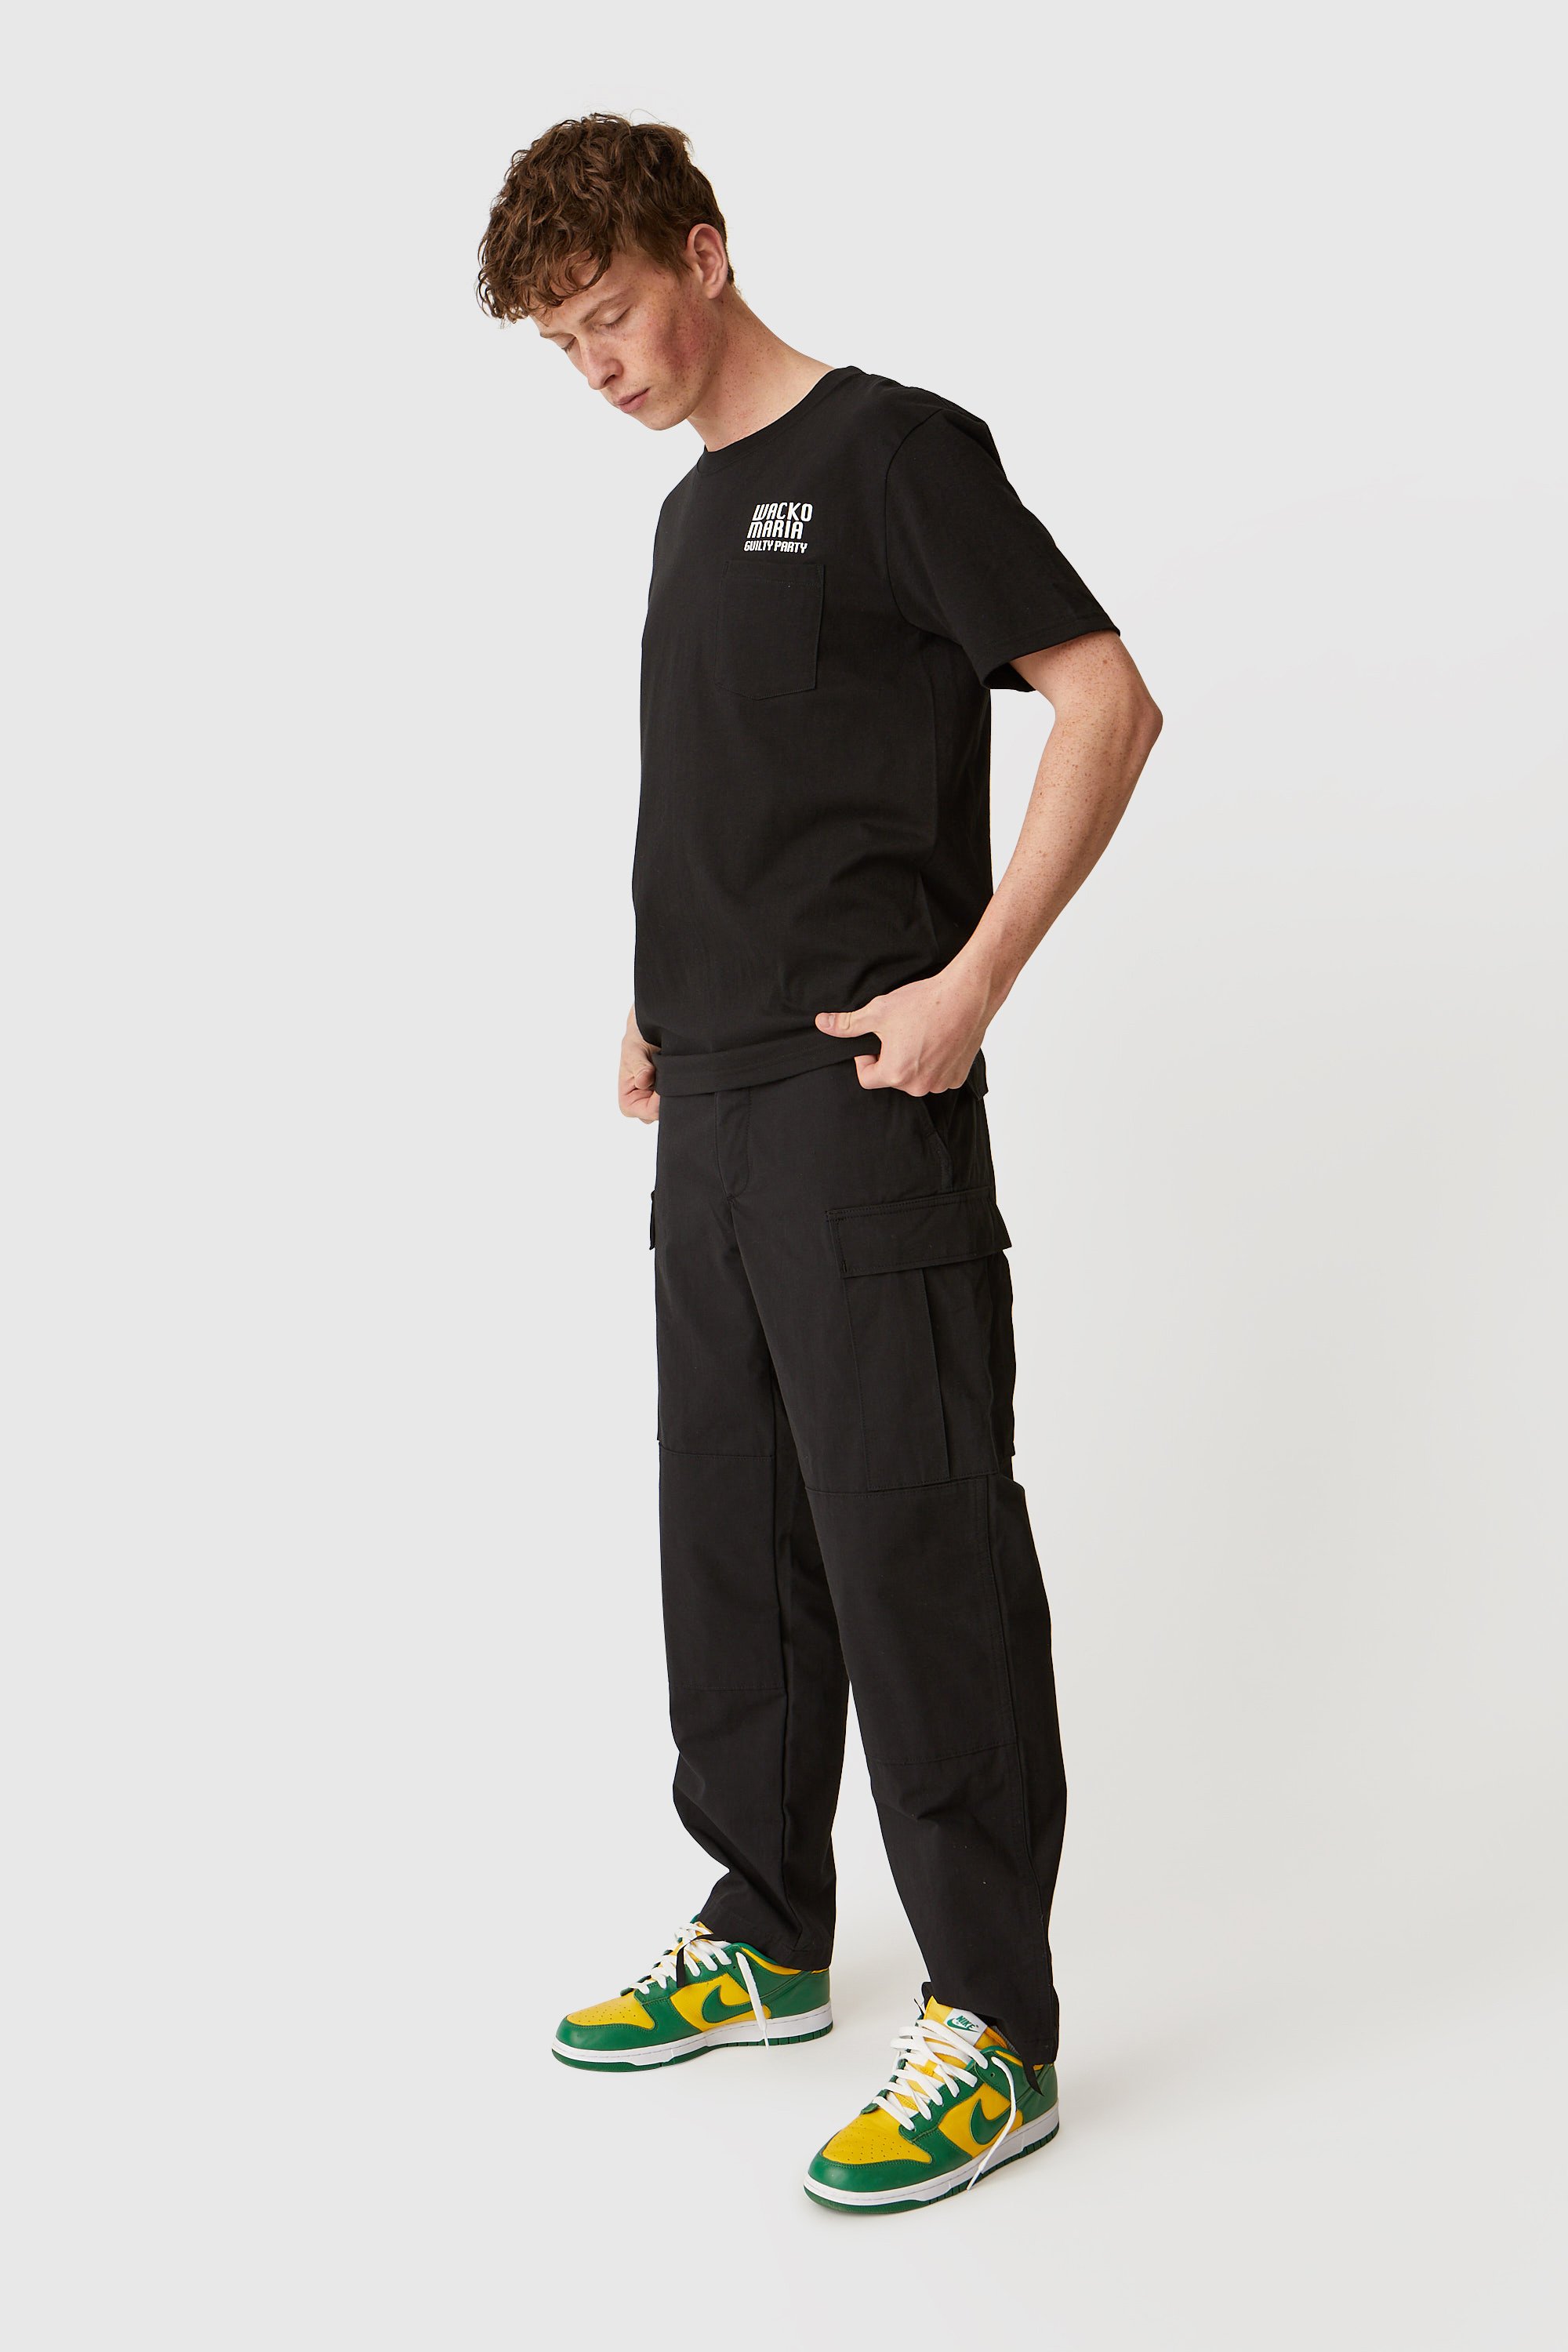 WTAPS Wmill-Trousers 01 / Trousers Black | WoodWood.com